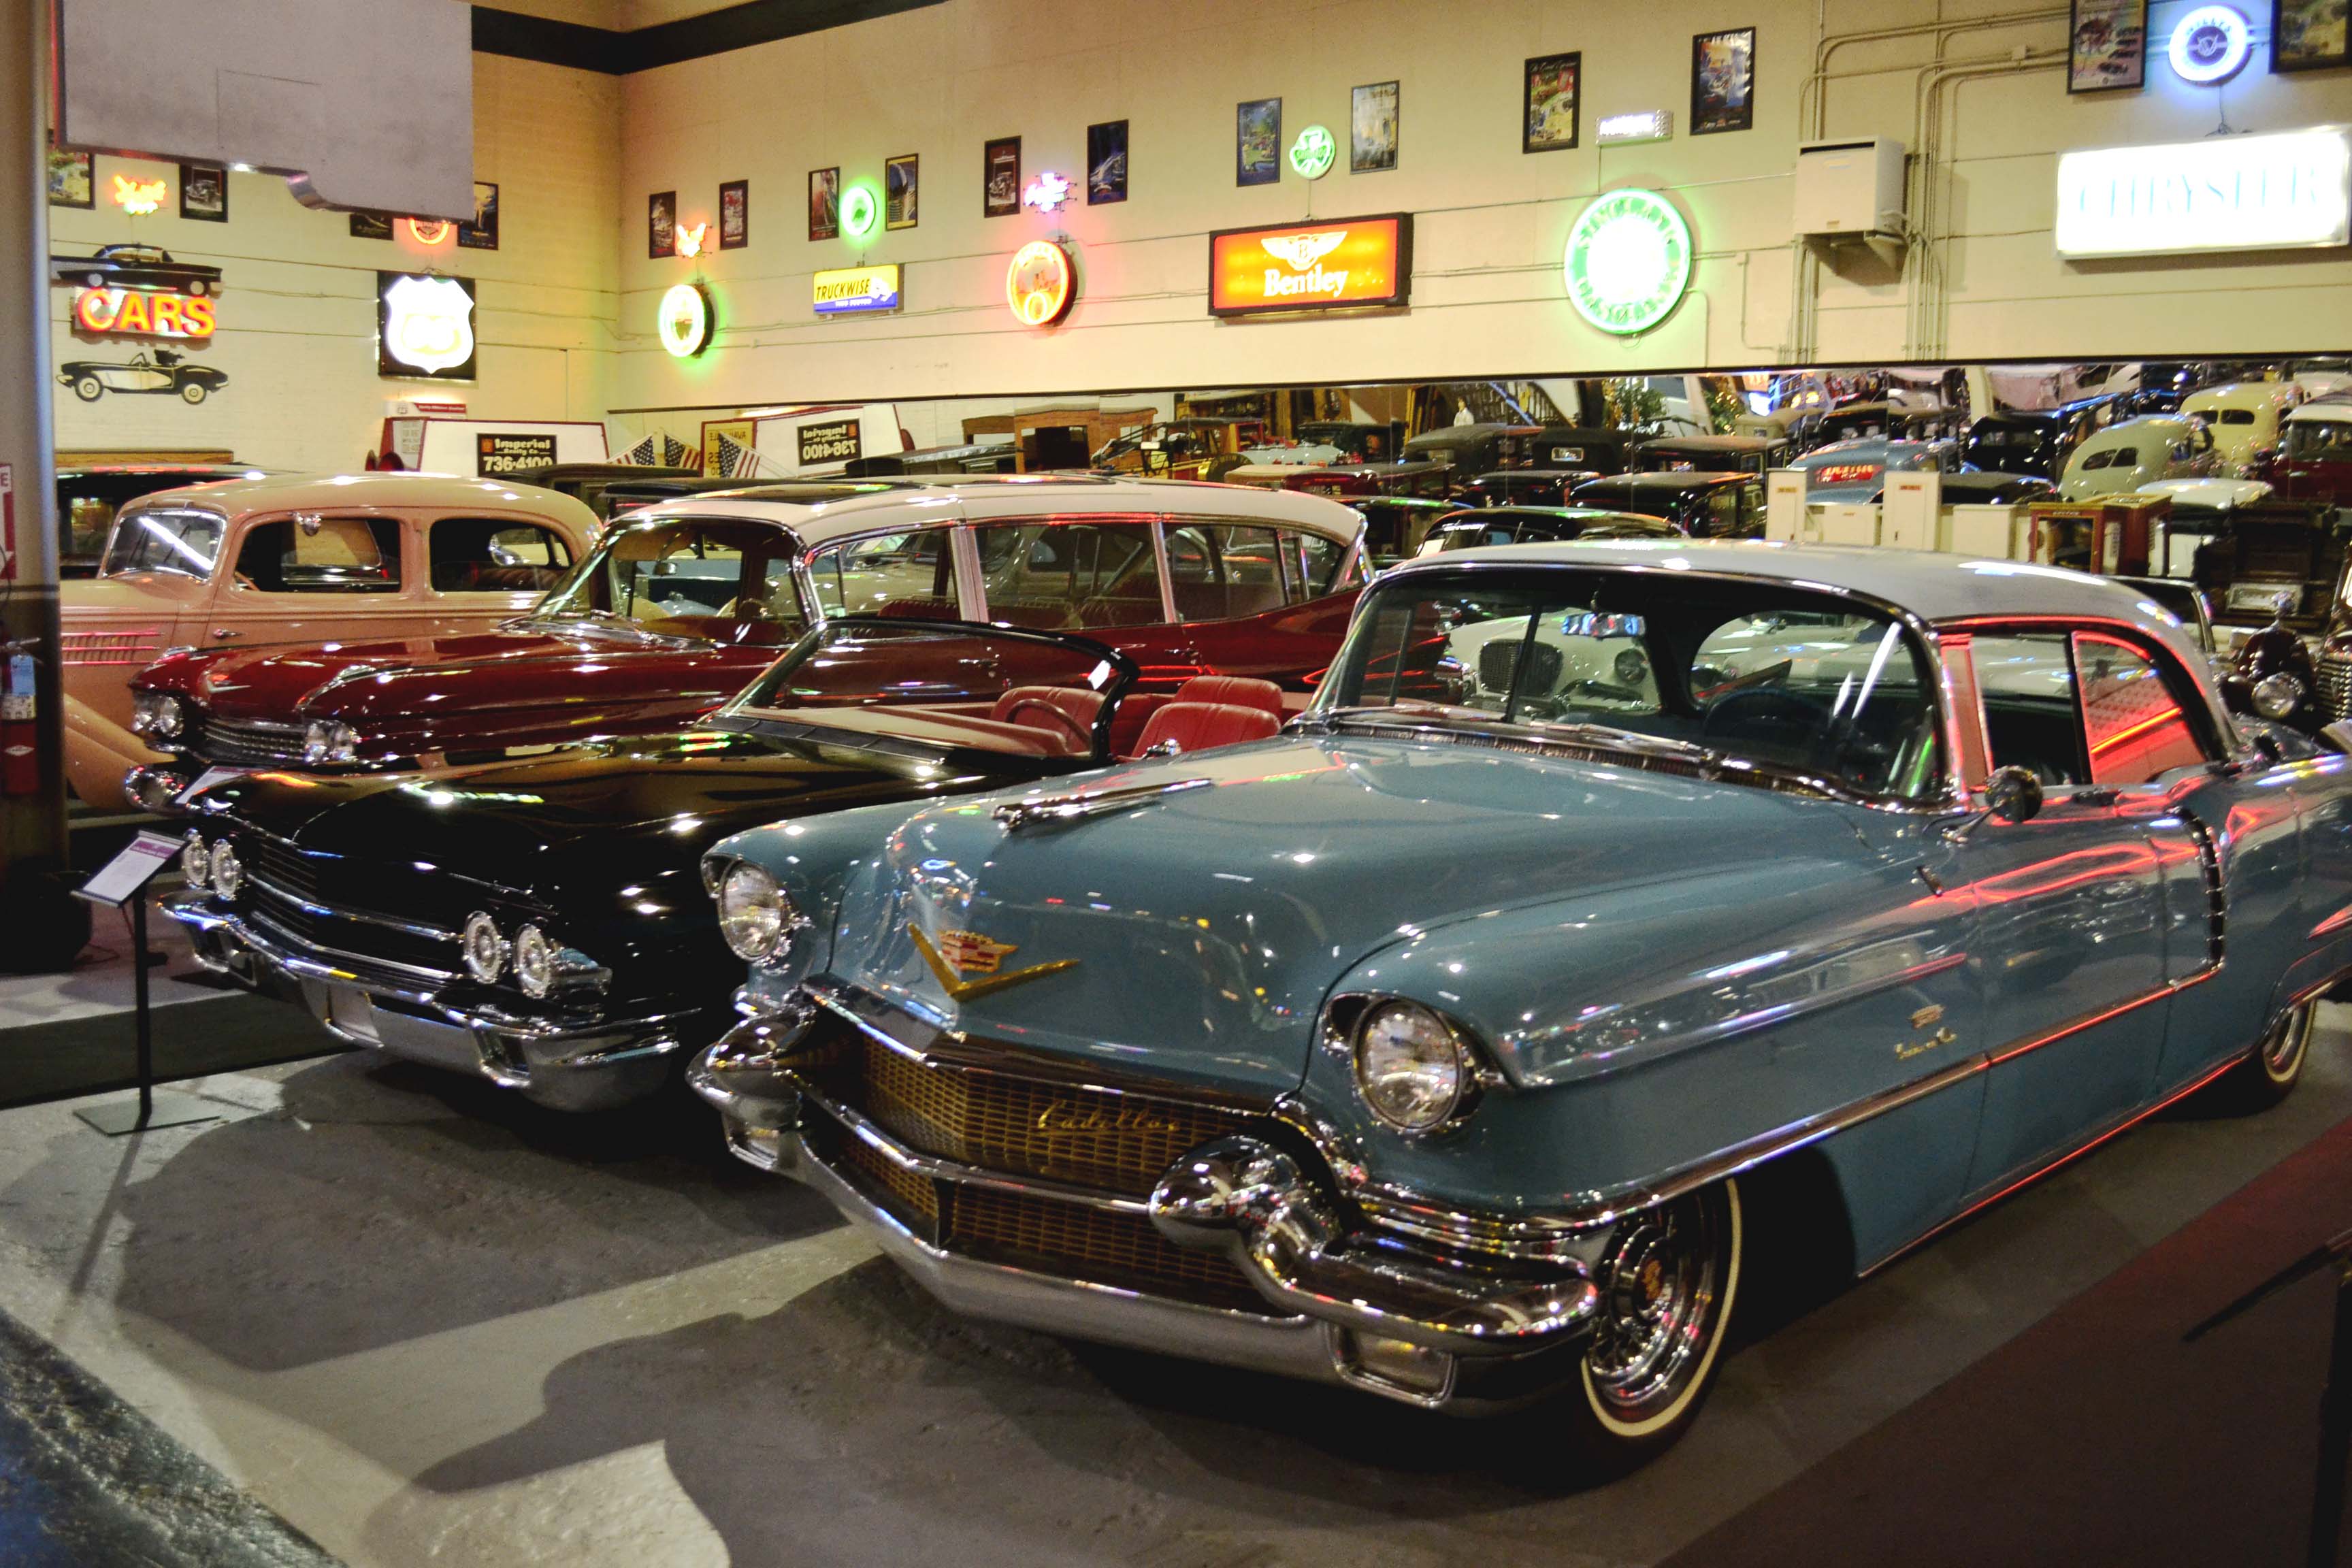 Chicago's Klairmont Kollection Auto Museum